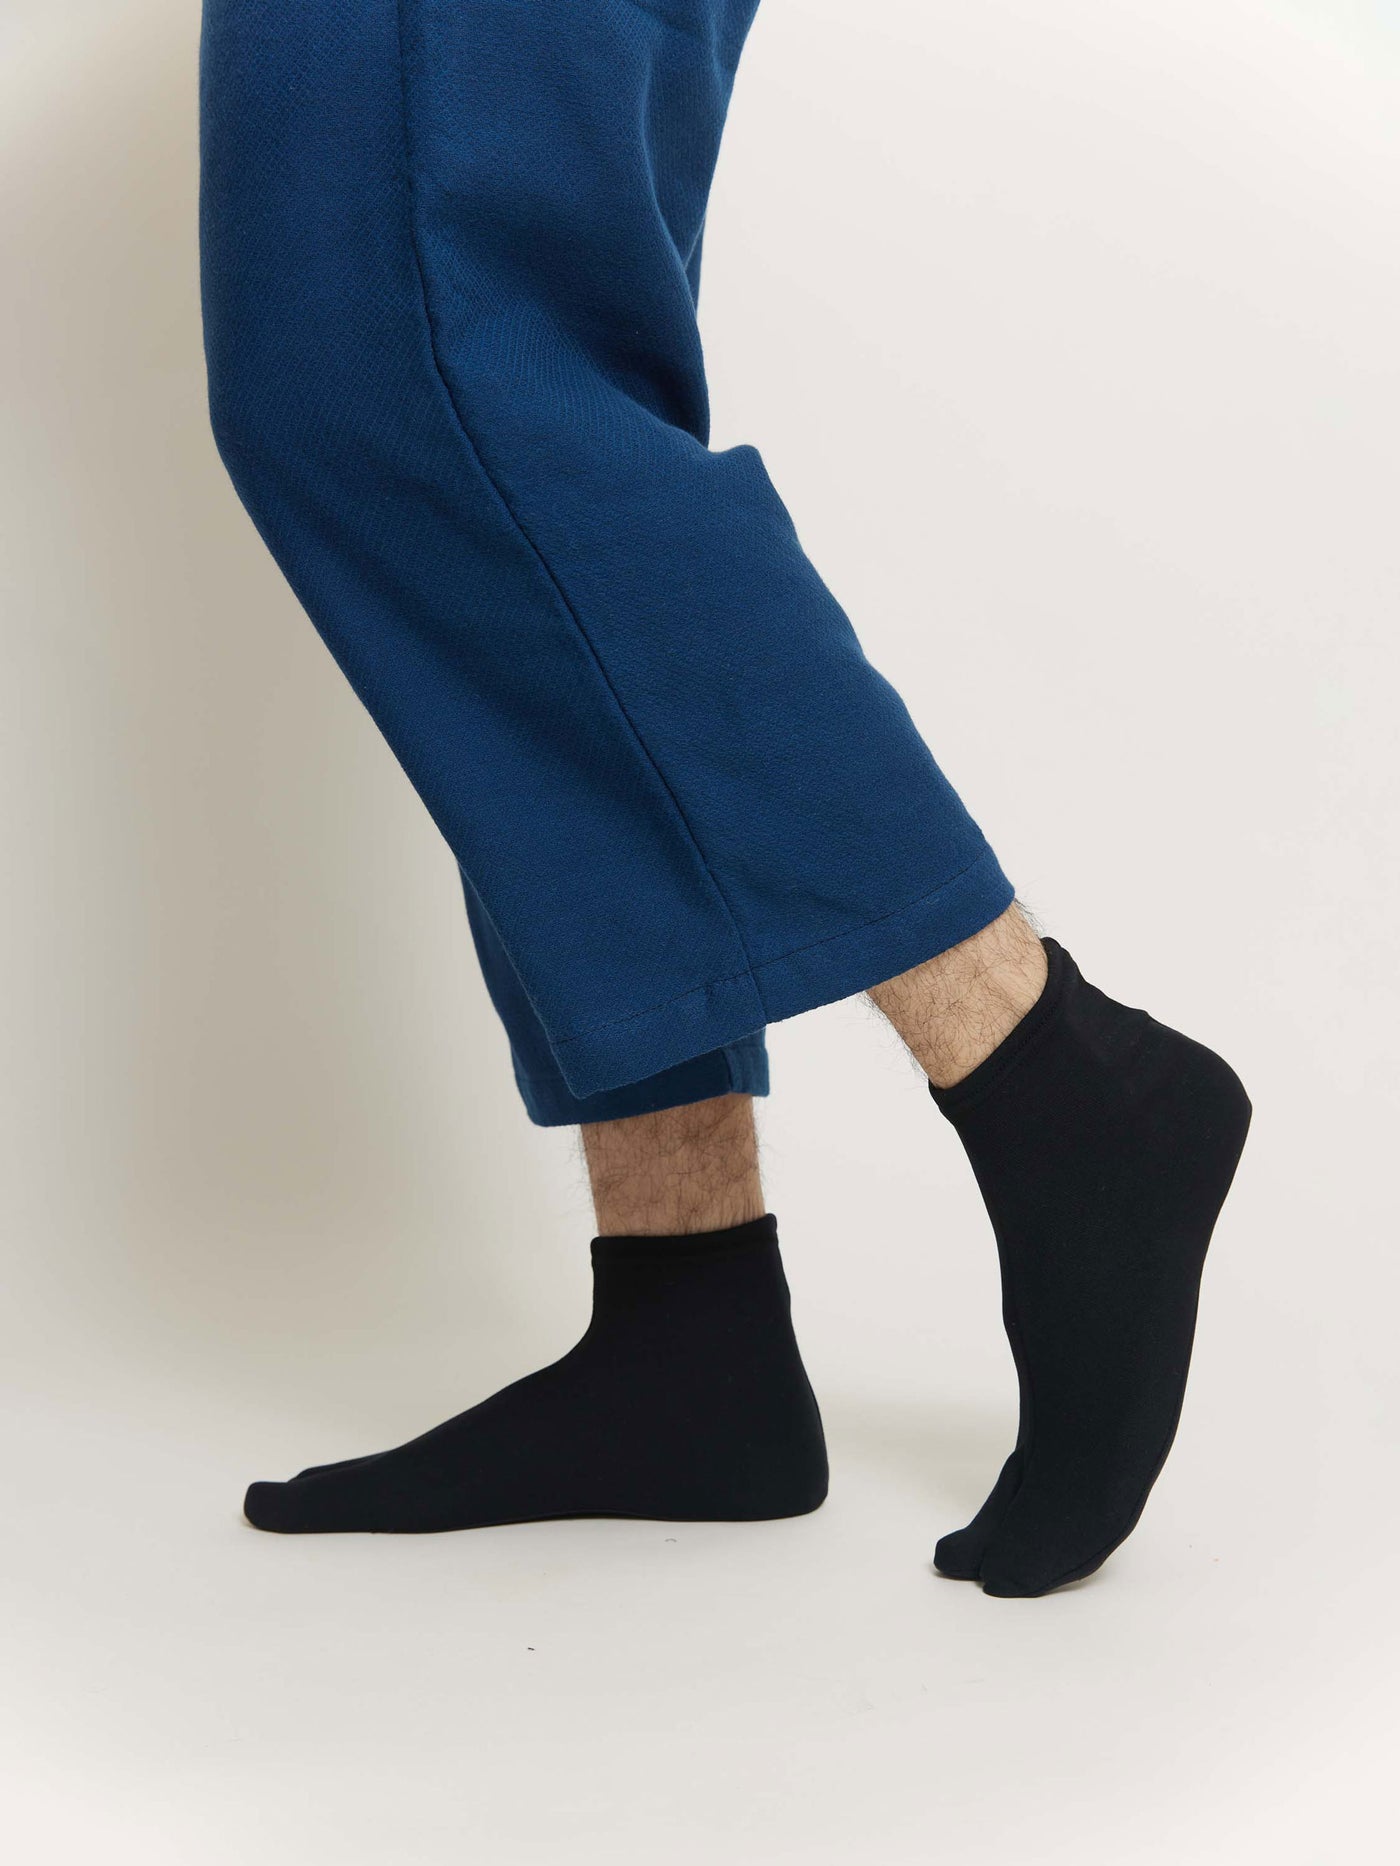 Japanese Men's Tabi Socks